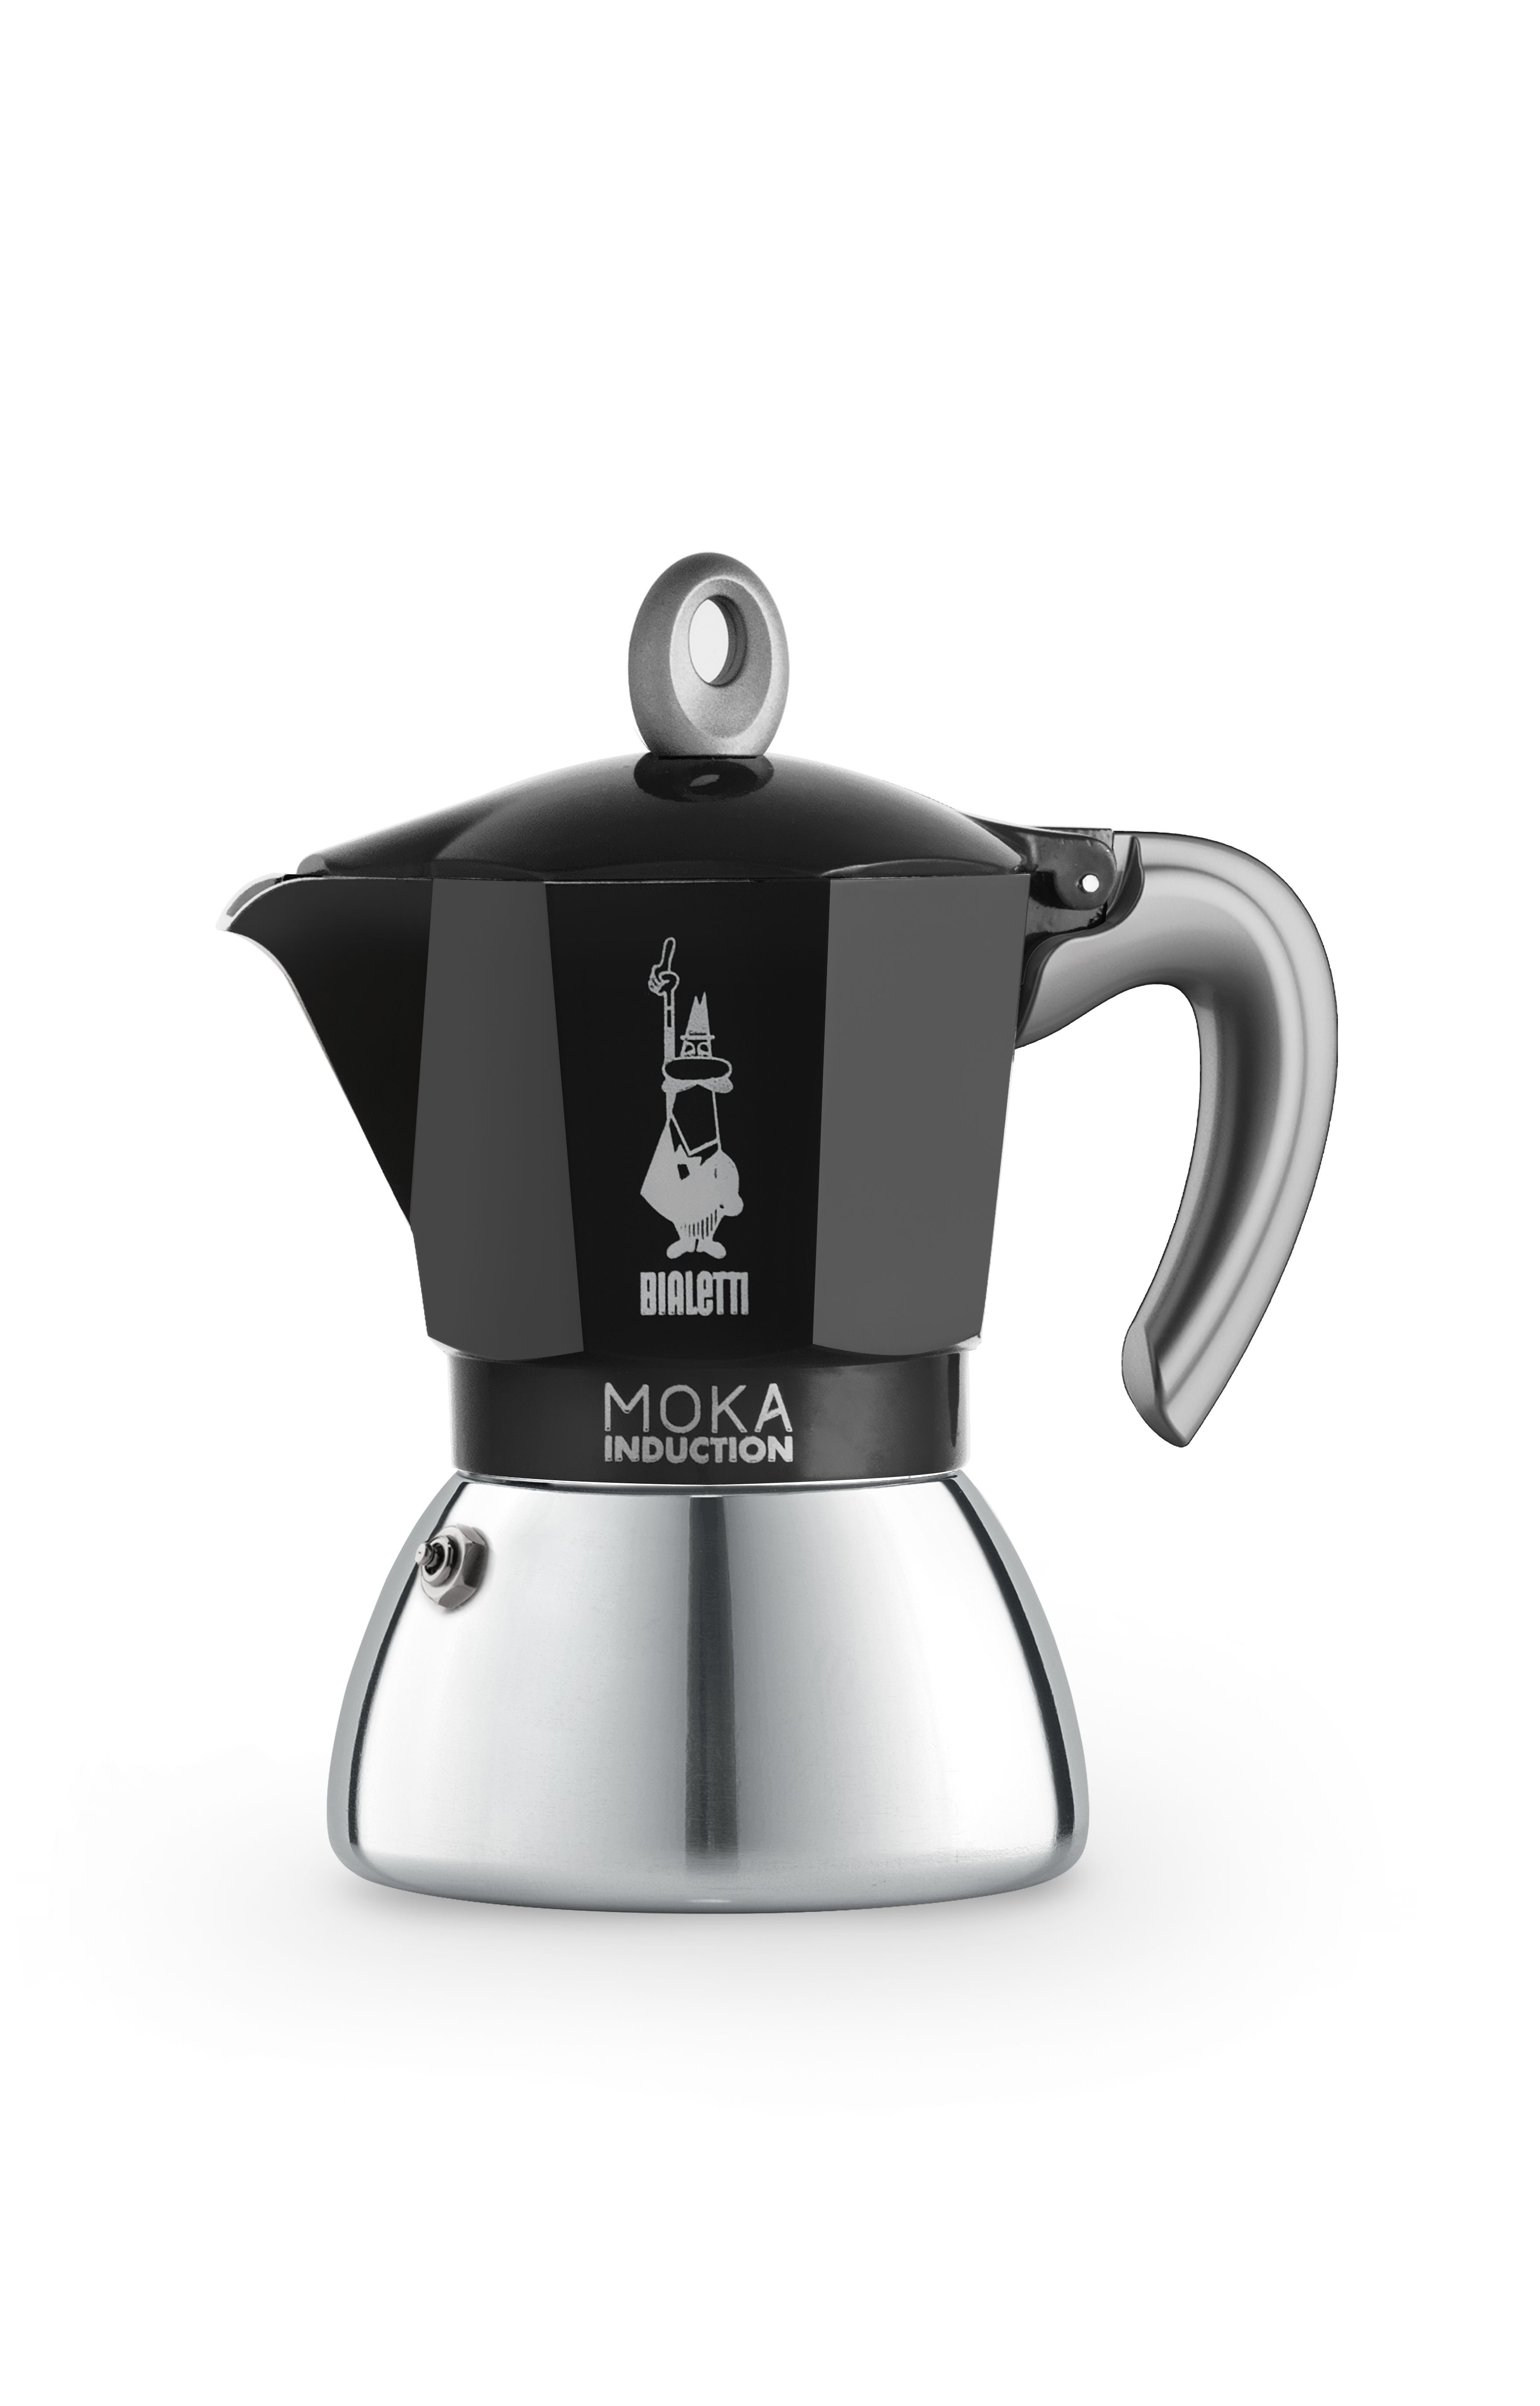 Espressokocher New Mokka Induction schwarz 4 Tassen